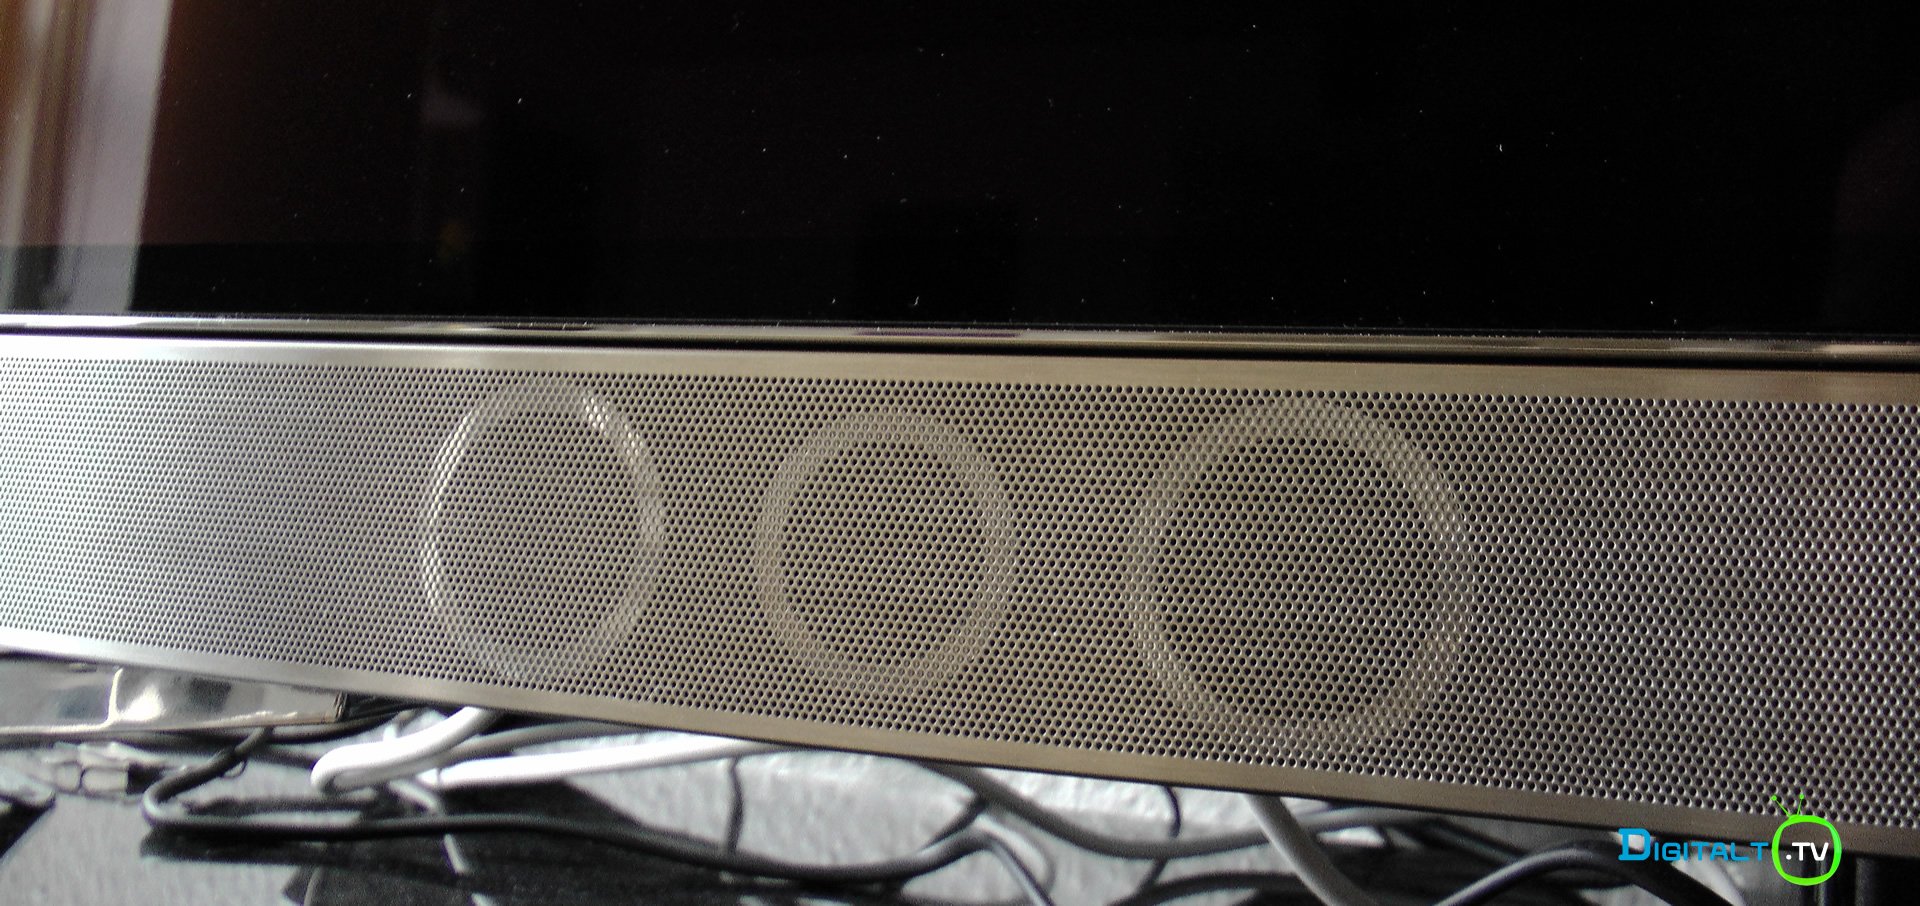 Philips 55POS901F soundbar closeup